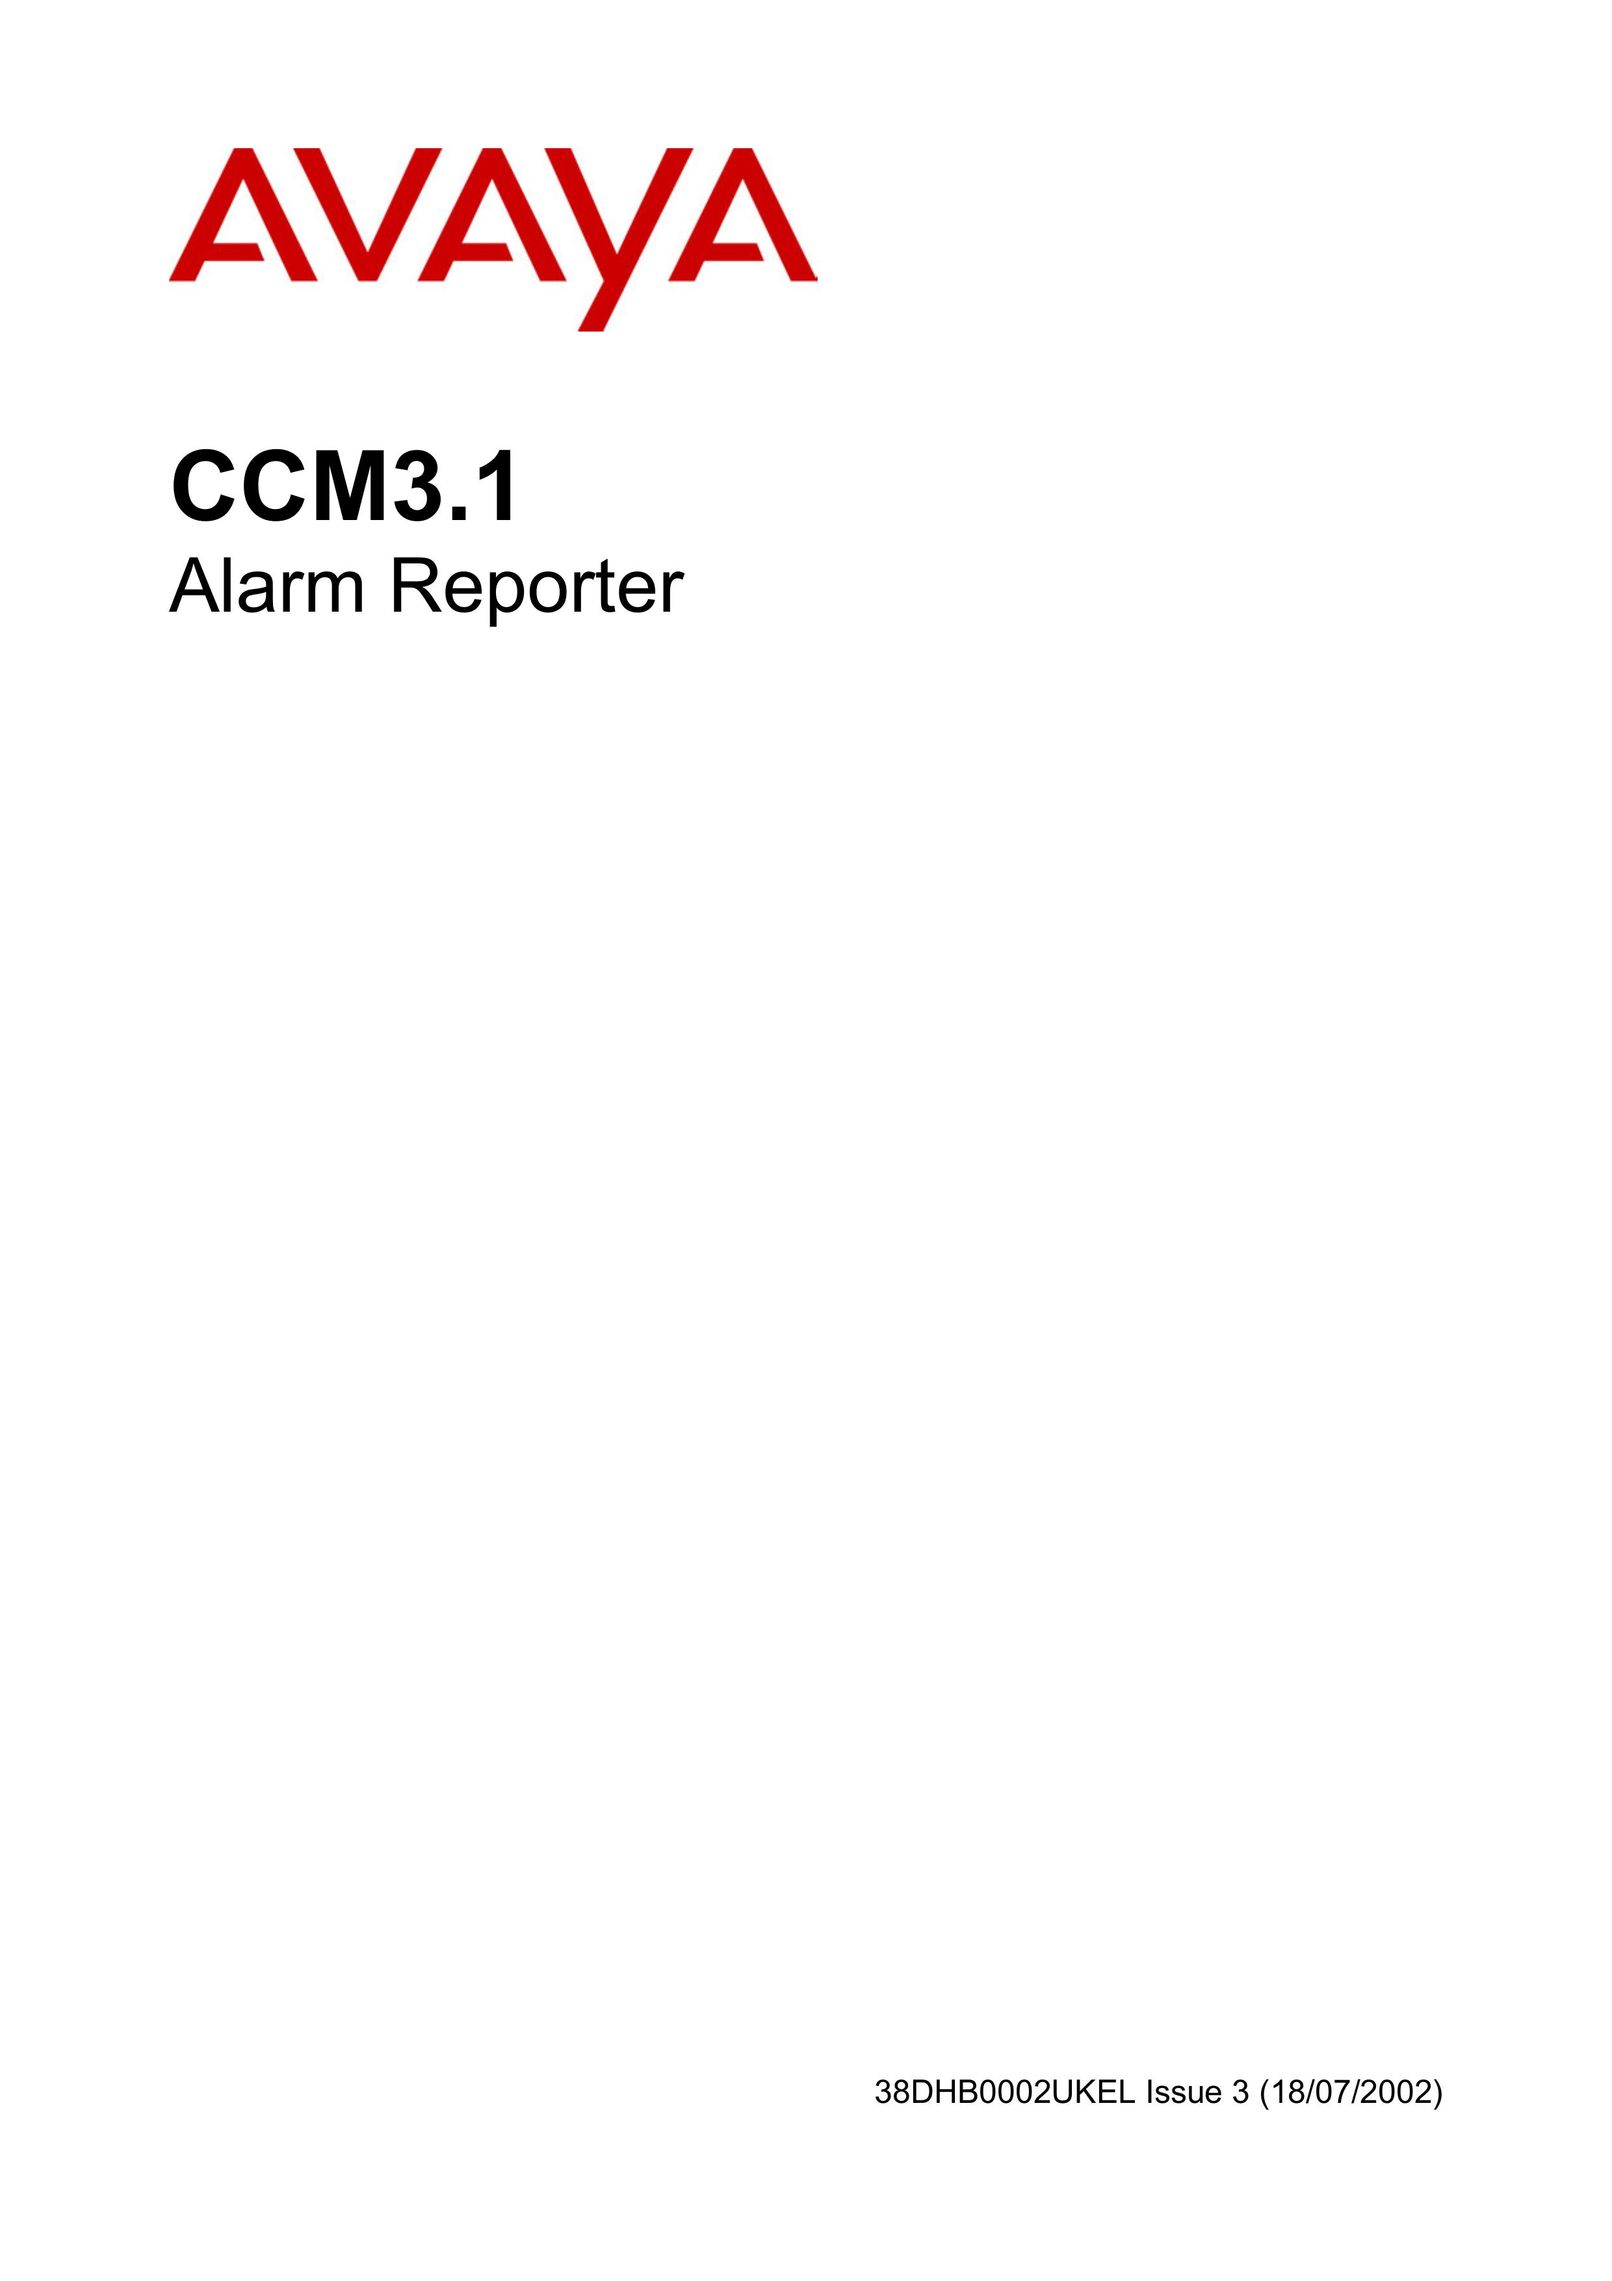 Avaya CCM3.1 Network Card User Manual